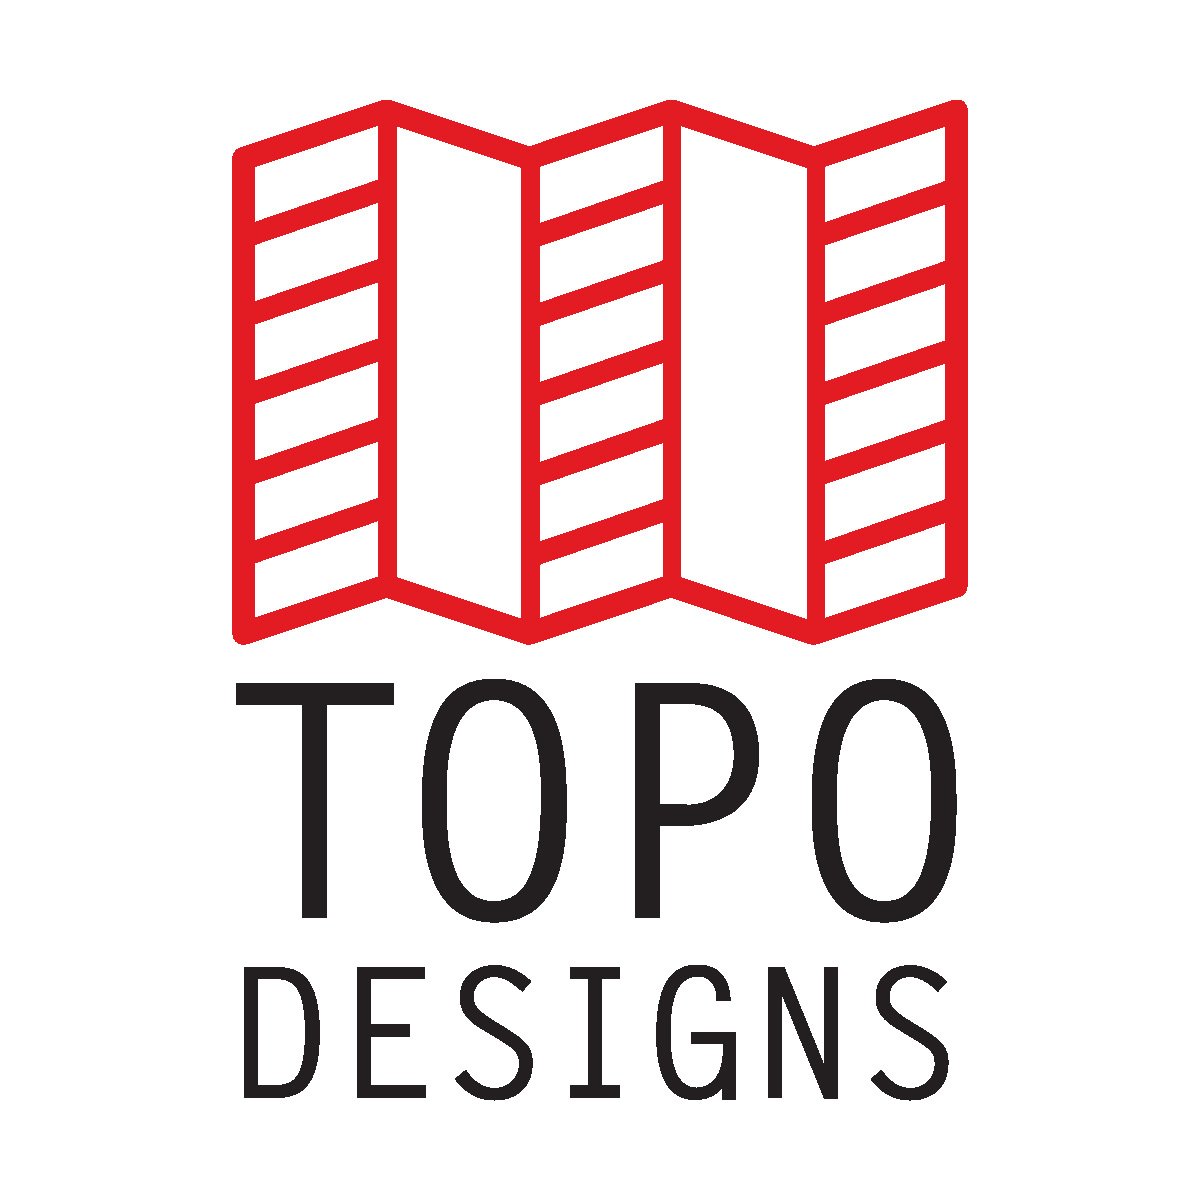 topo-designs-logo.jpg